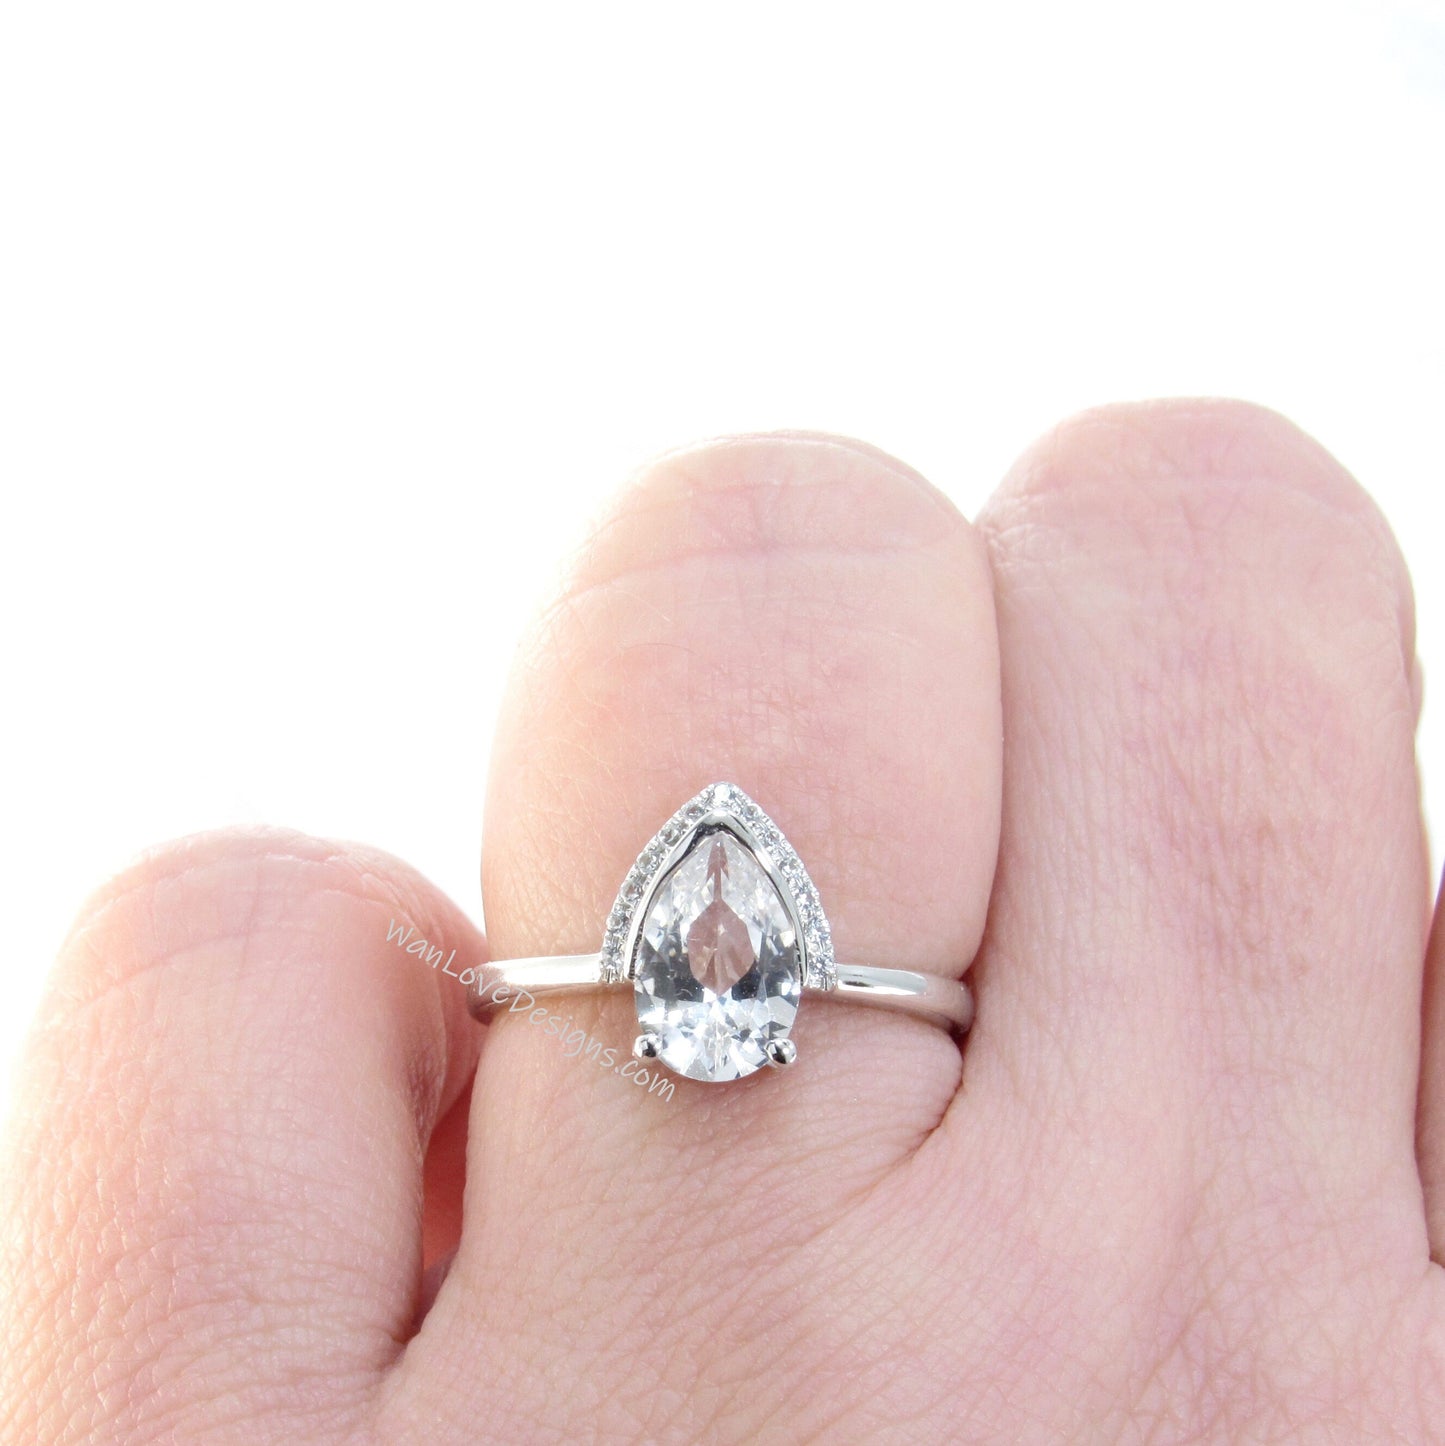 Vintage Pear shape white sapphire engagement ring rose gold ring pear cut diamond ring semi bezel half halo ring anniversary promise ring